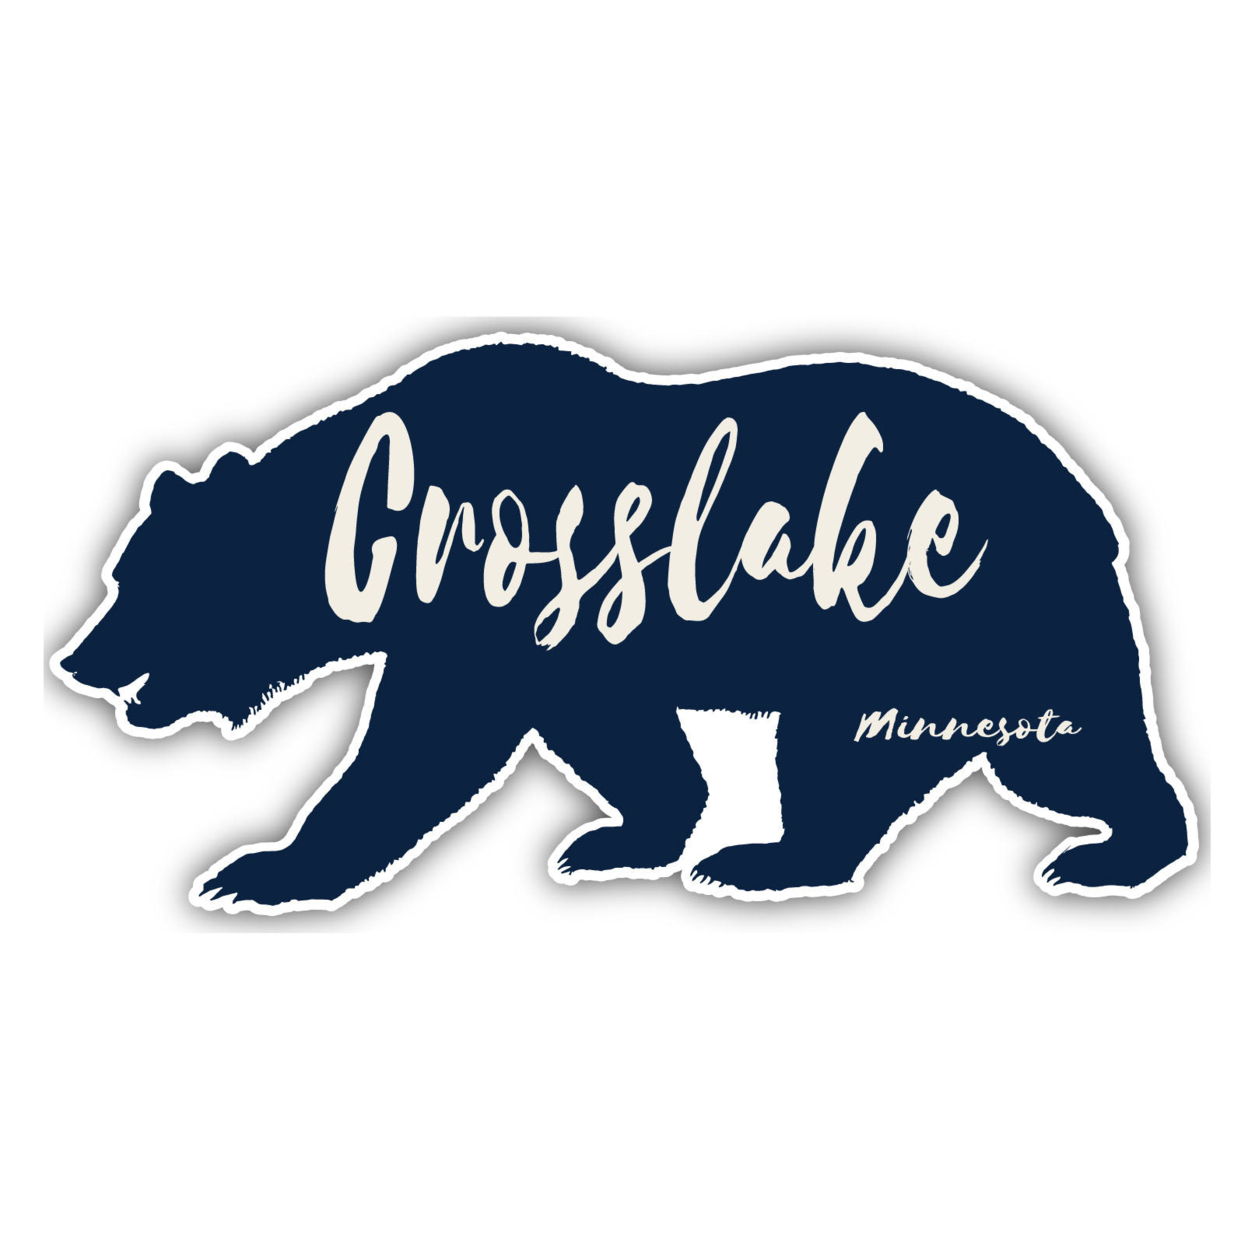 Crosslake Minnesota Souvenir Decorative Stickers (Choose Theme And Size) - 4-Pack, 12-Inch, Bear